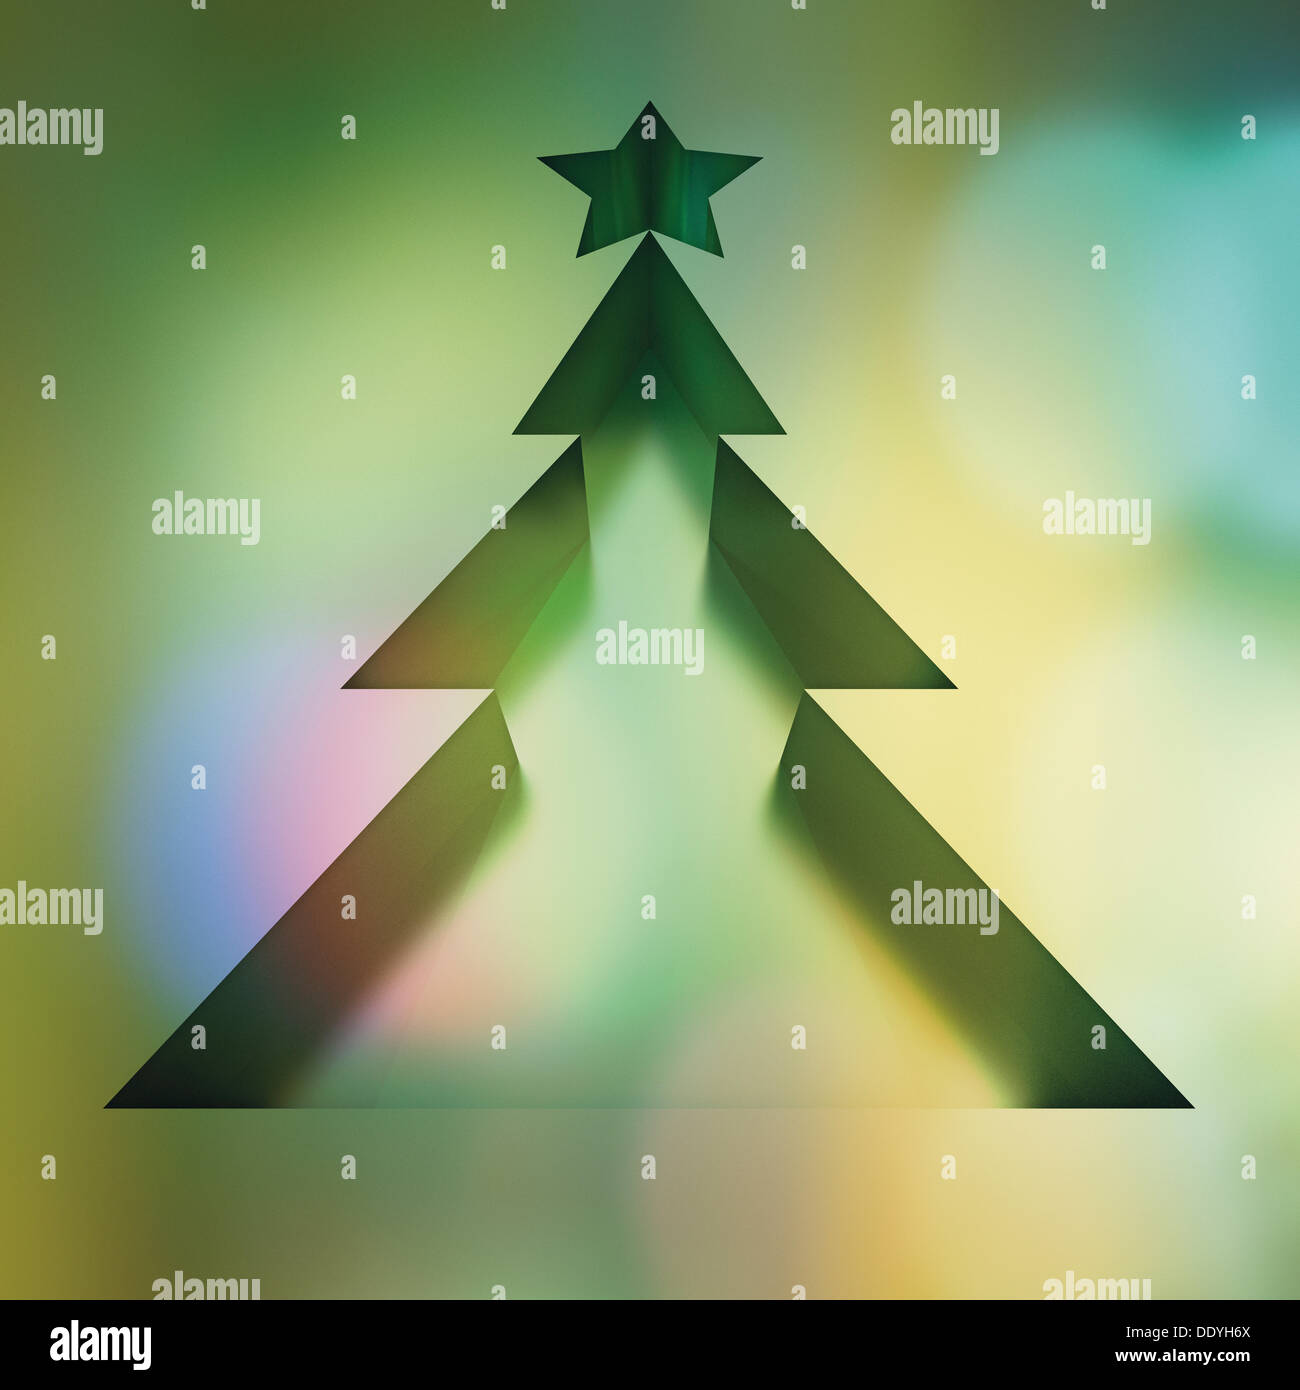 Christmas tree, illustration Stock Photo - Alamy